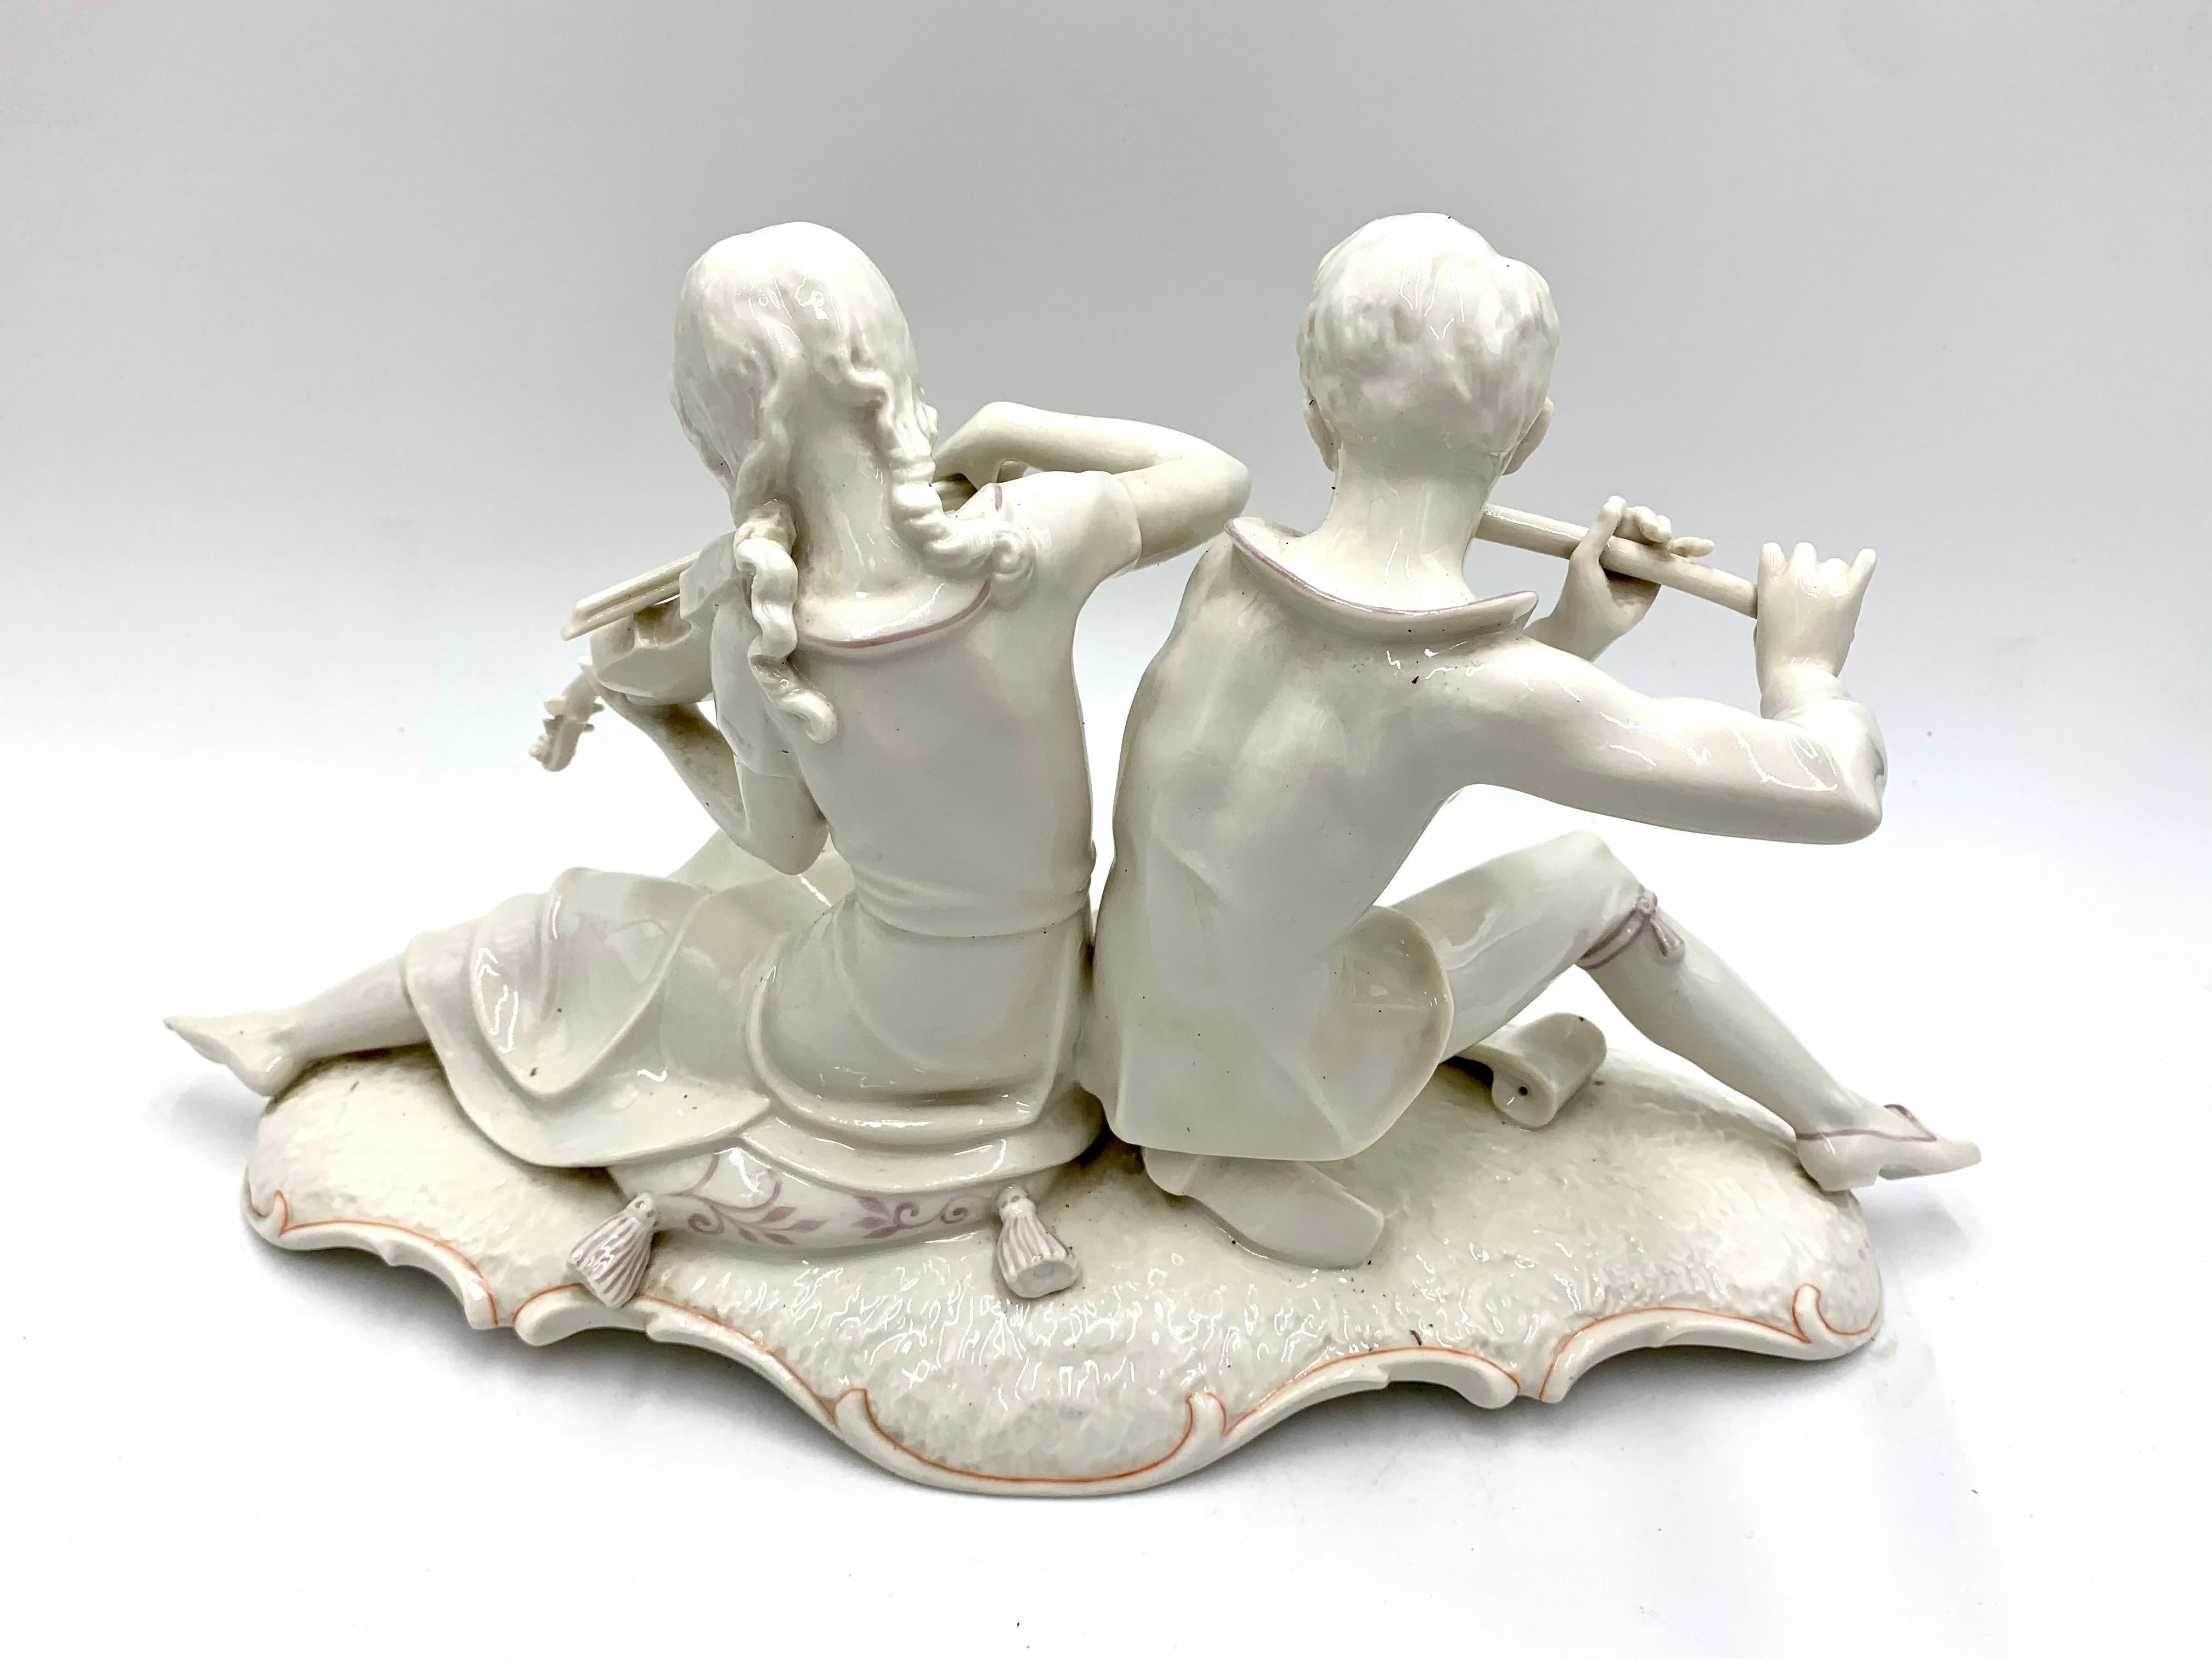 Porcelain Figurine 